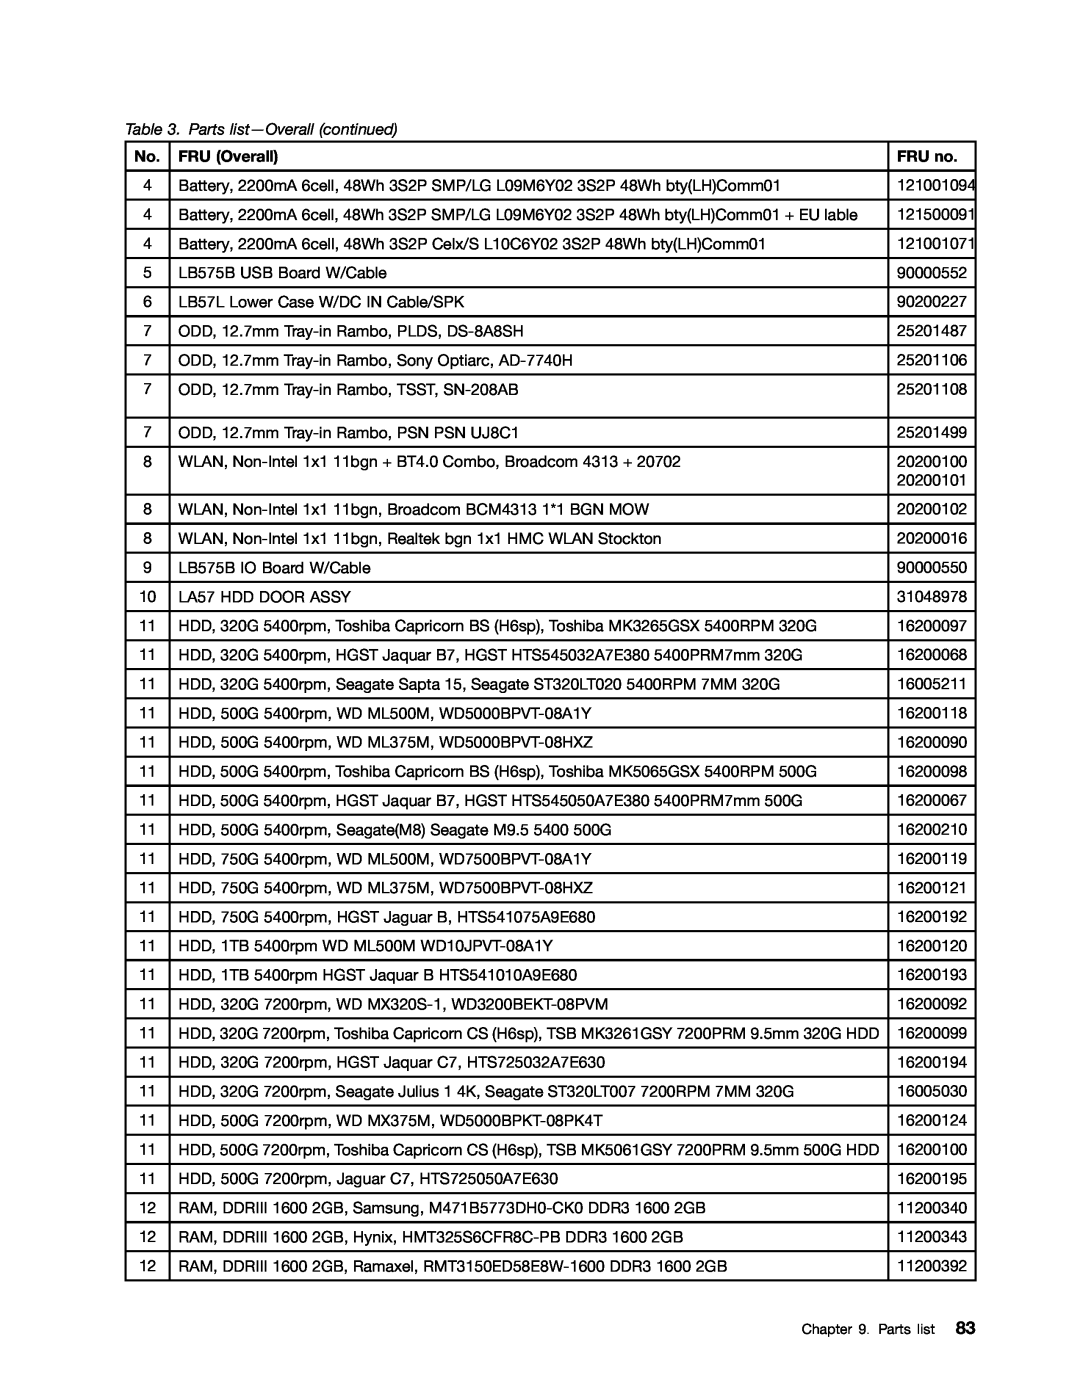 Lenovo B575E manual Parts list-Overall continued, Battery, 2200mA 6cell, 48Wh 3S2P SMP/LG L09M6Y02 3S2P 48Wh btyLHComm01 